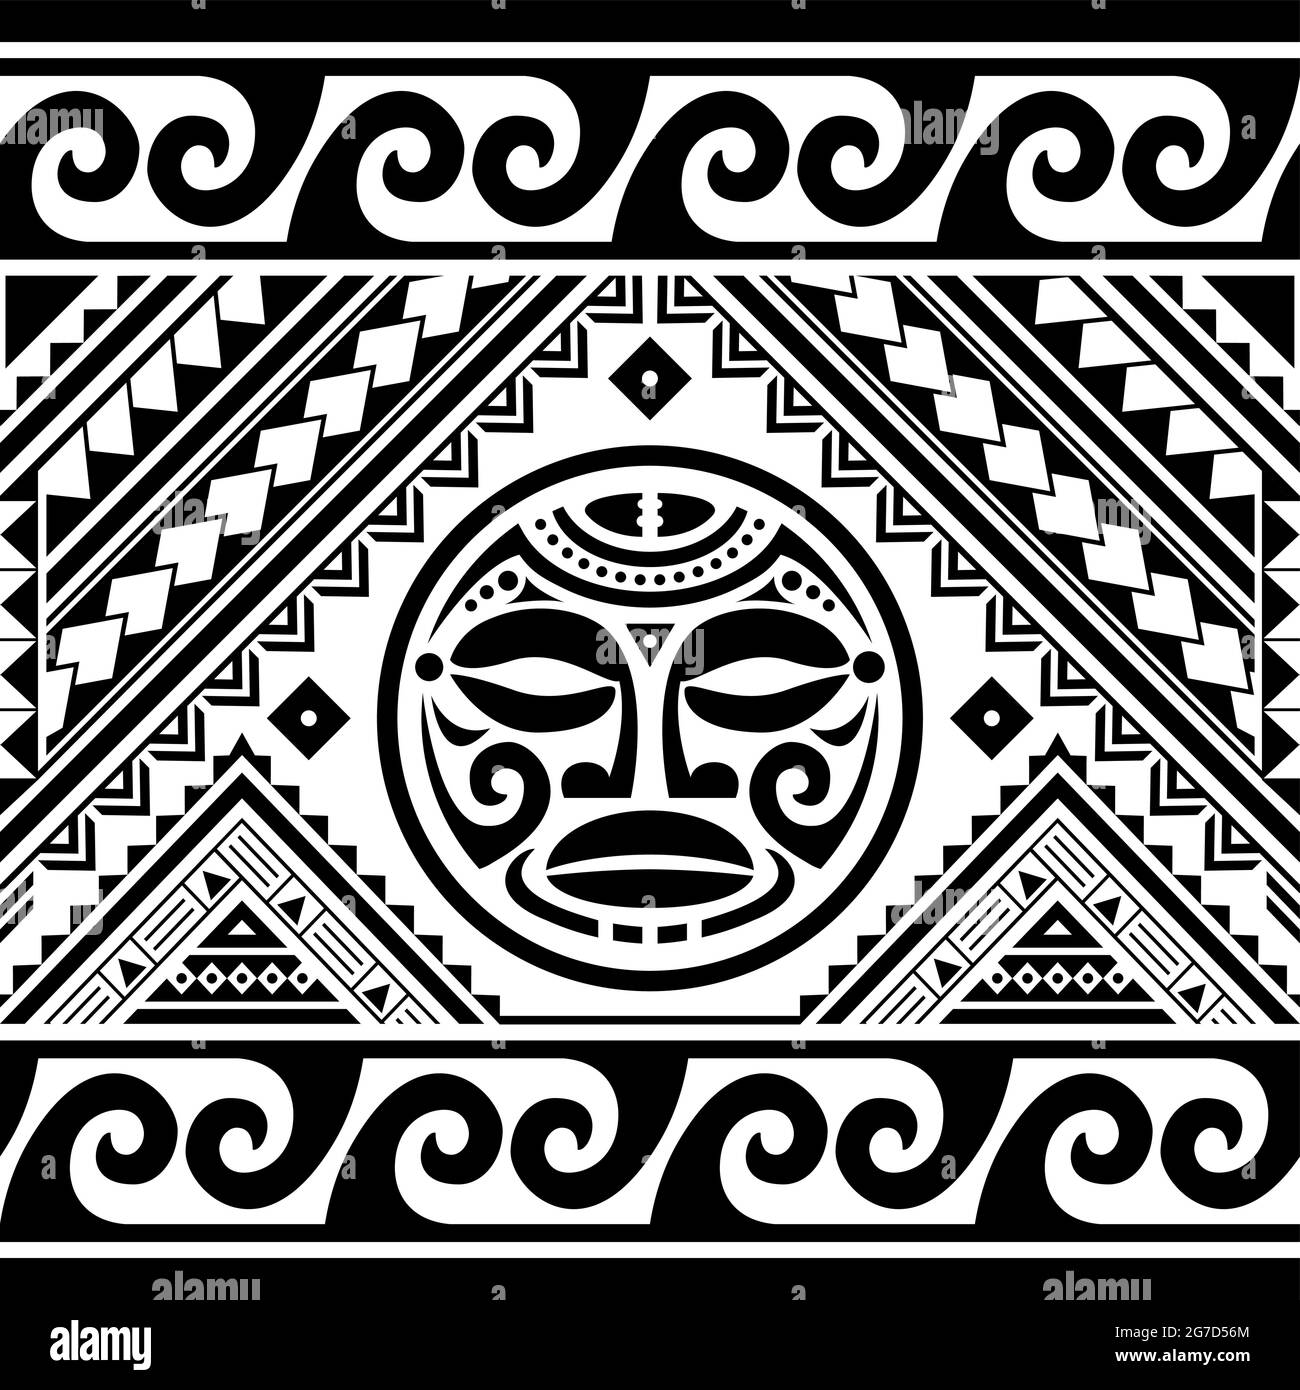 Los Angeles exhibit explores significance of Samoan tattoos – San Gabriel  Valley Tribune